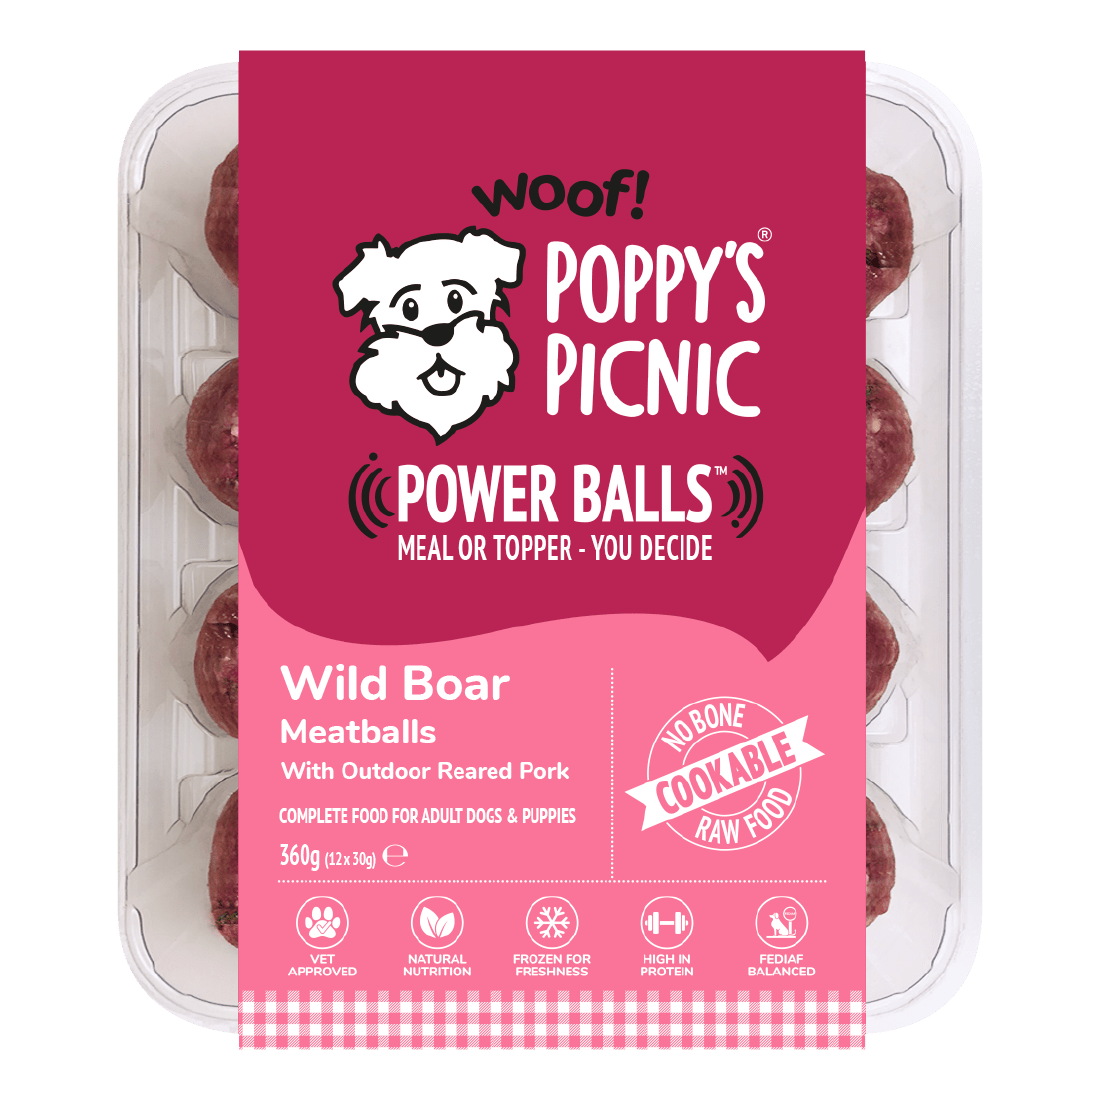 POWER BALLS Wild Boar